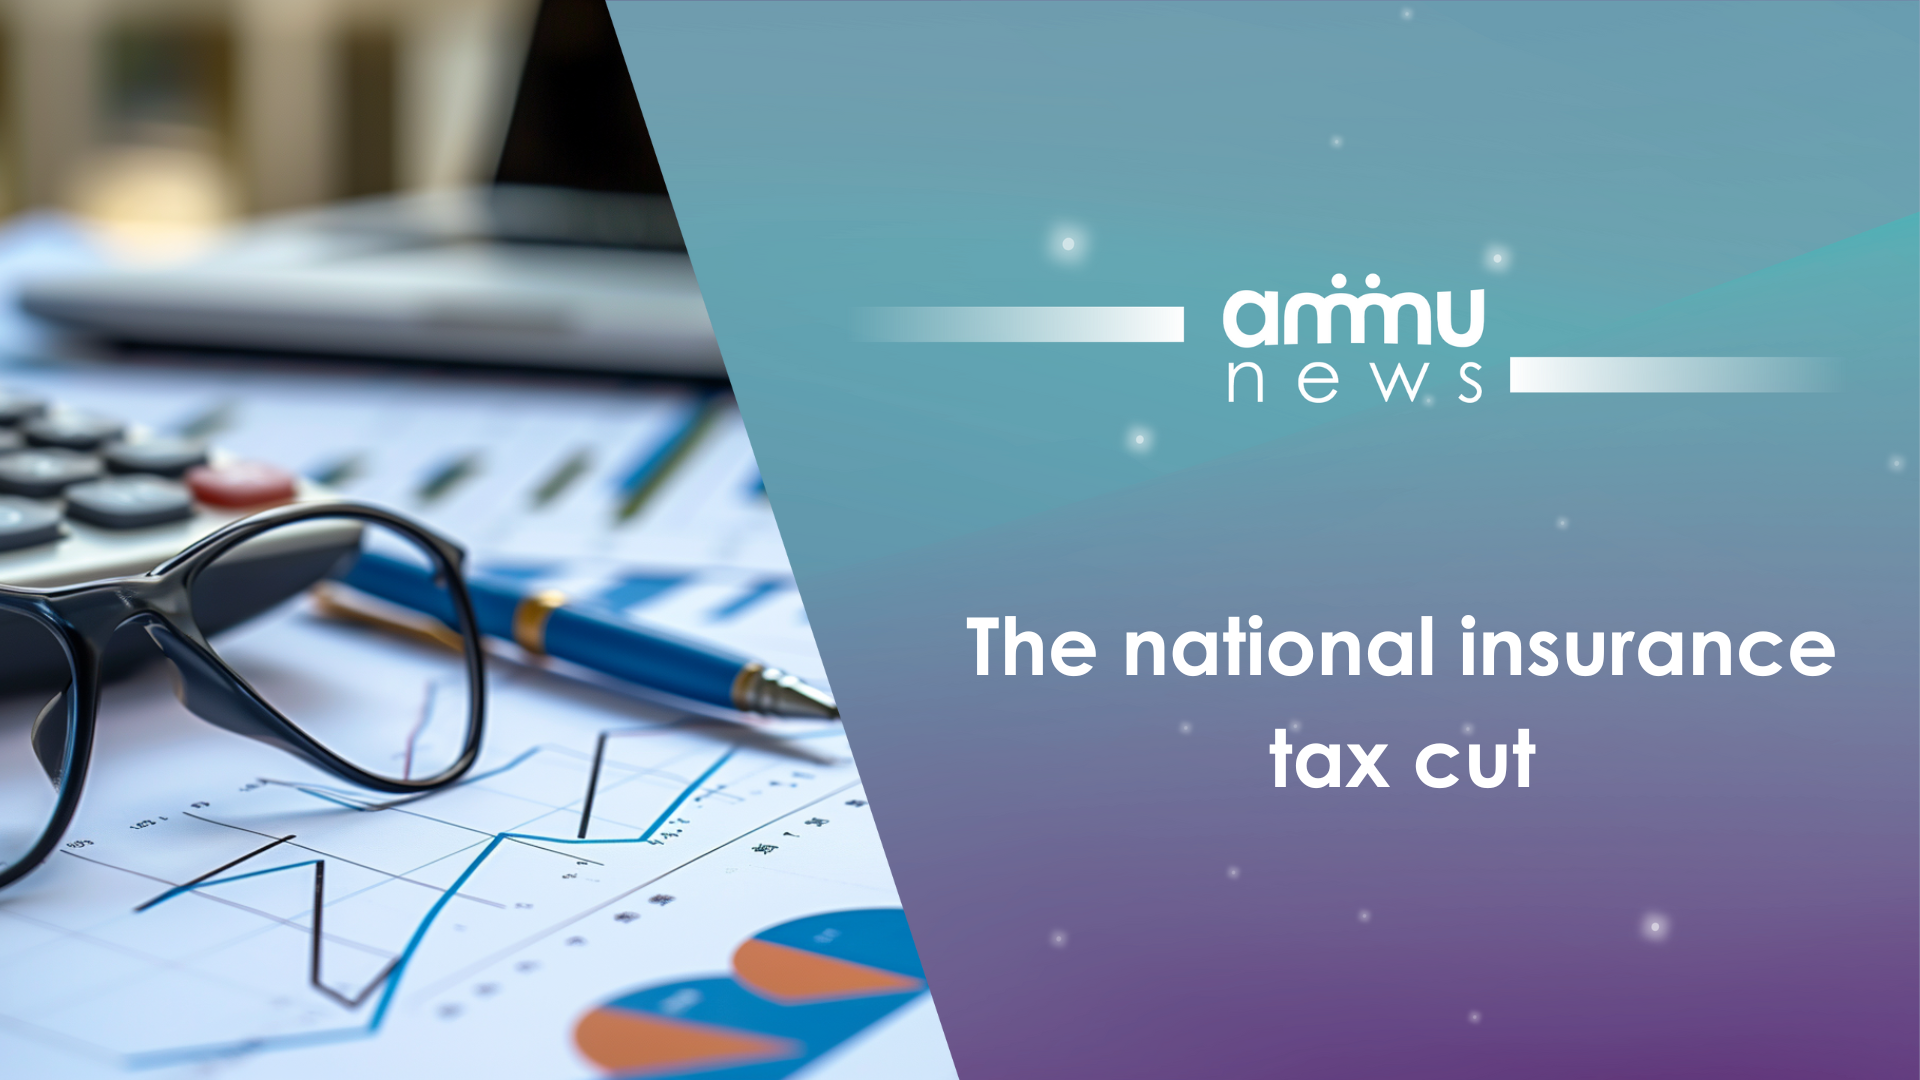 The national insurance tax cut